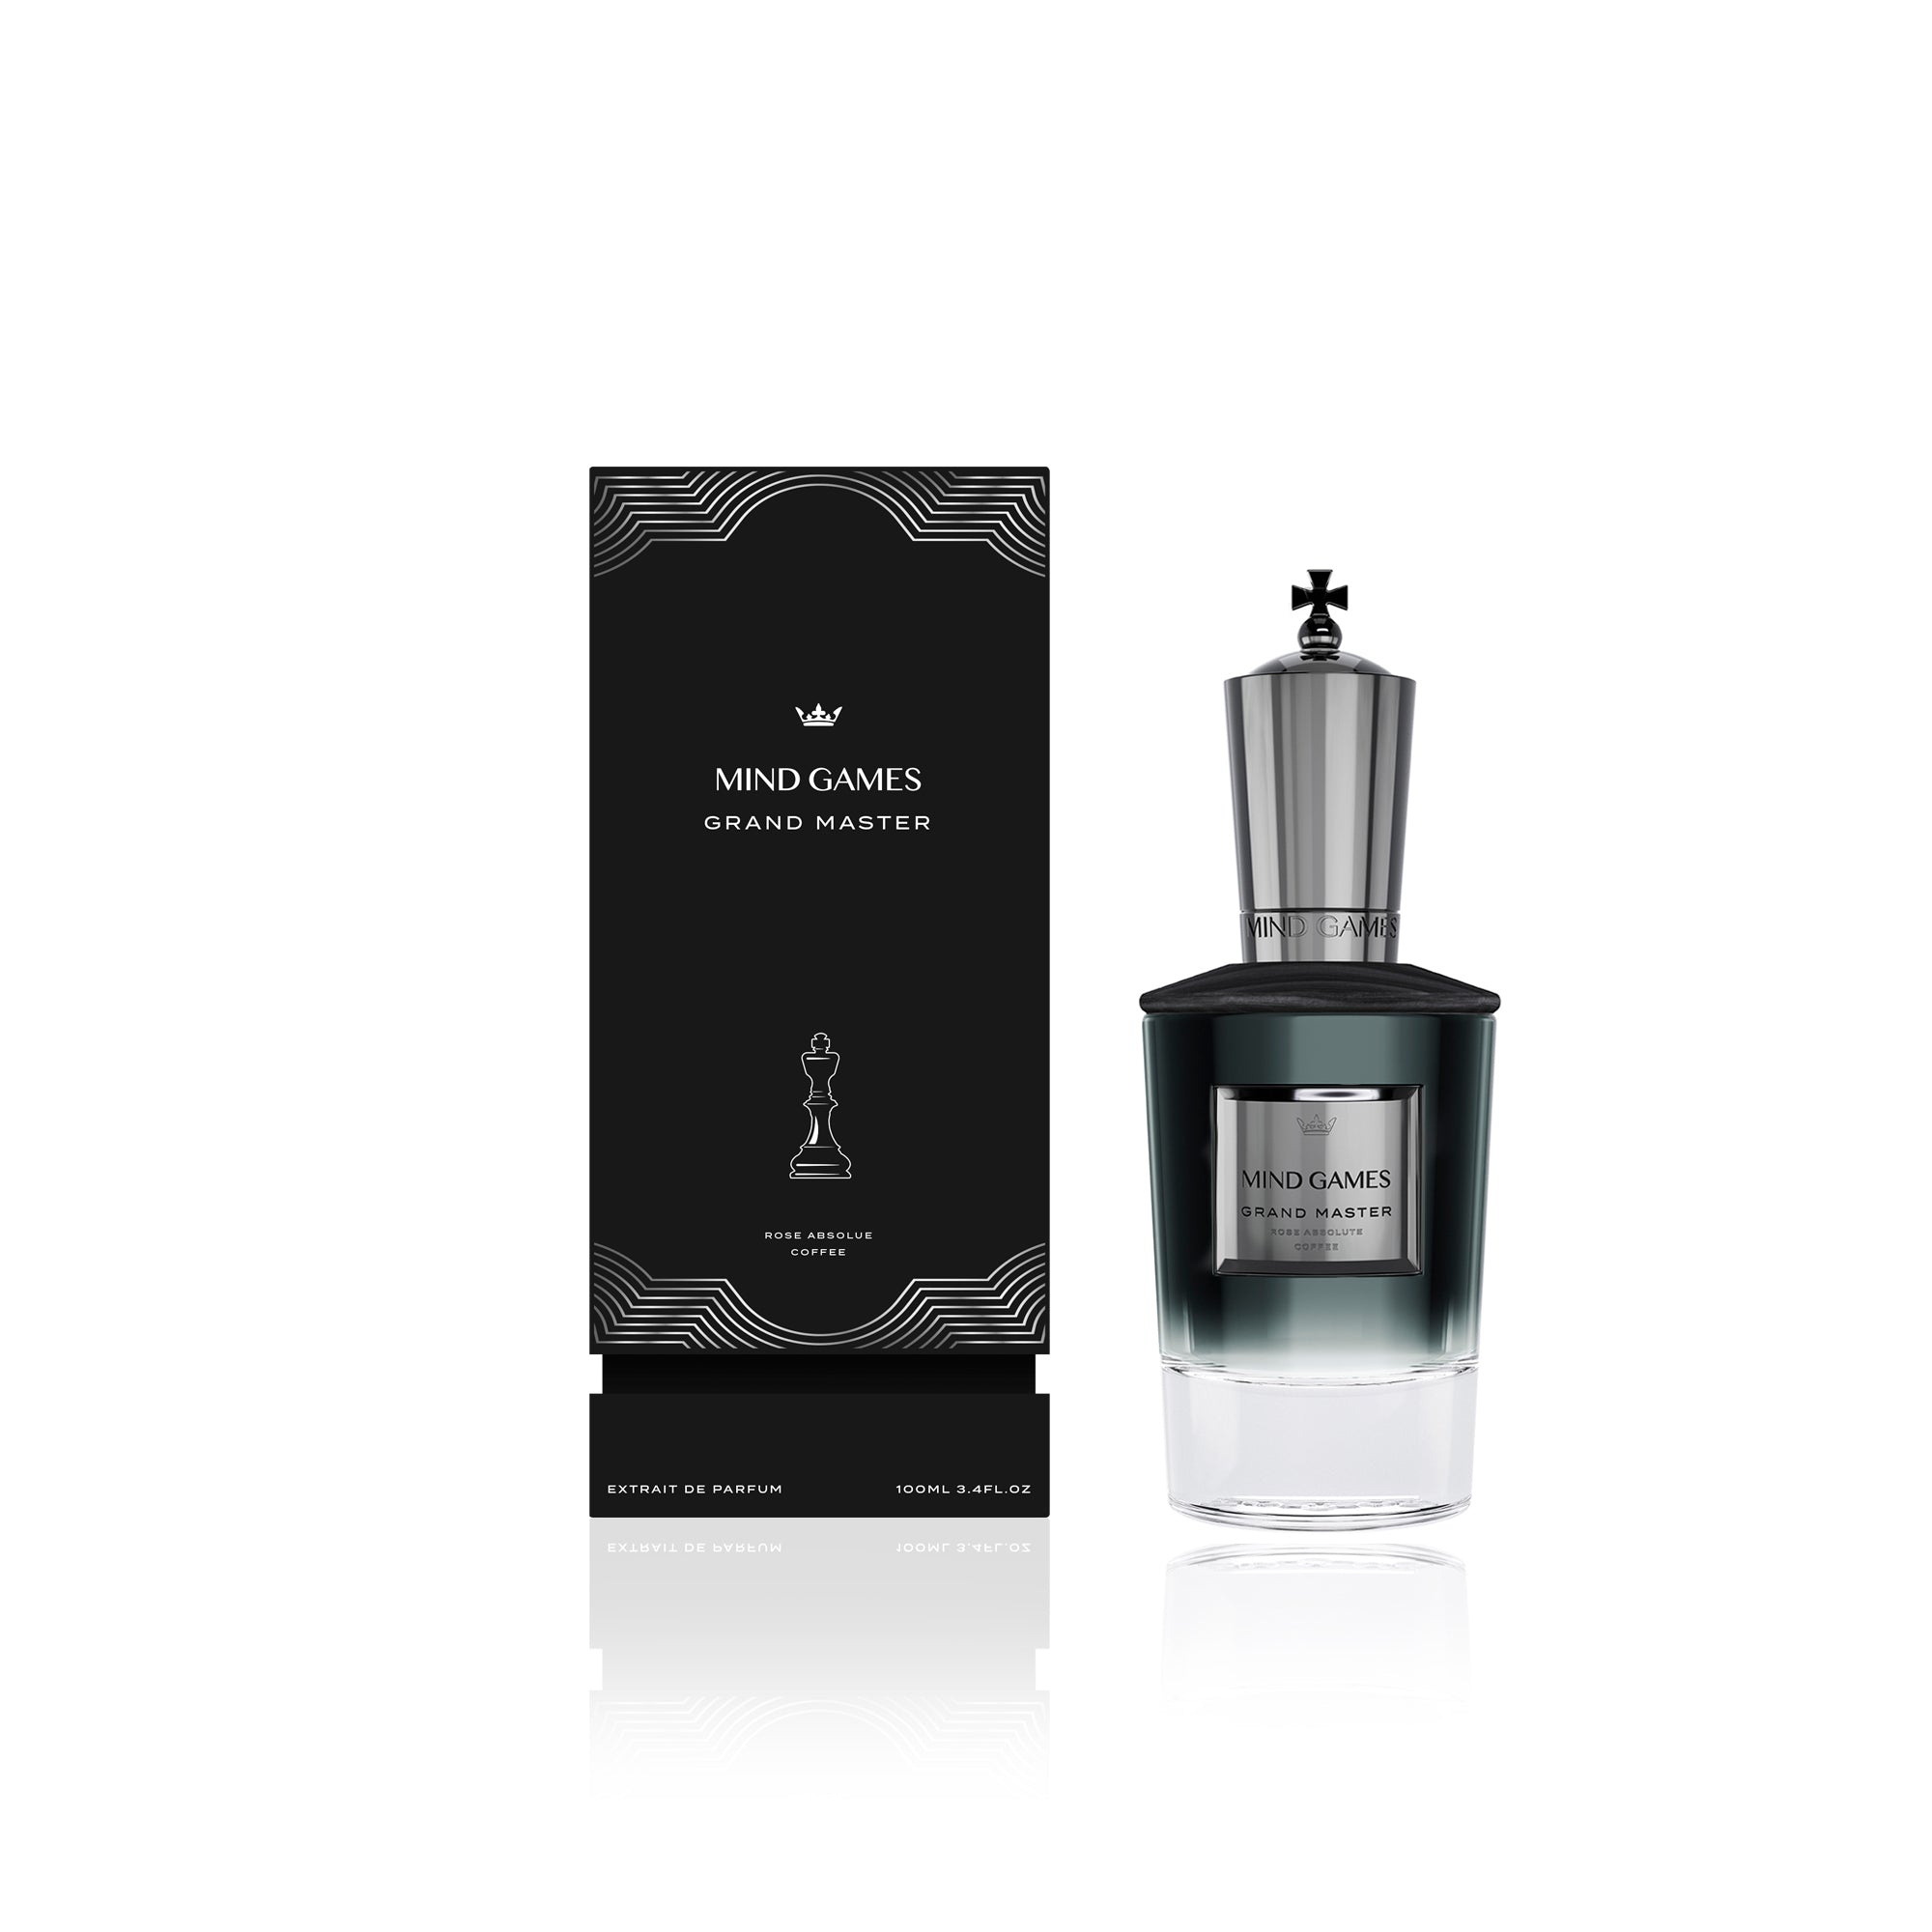 Fresh Coffee EDP Unisex Perfume - 50ml – Main Market Online